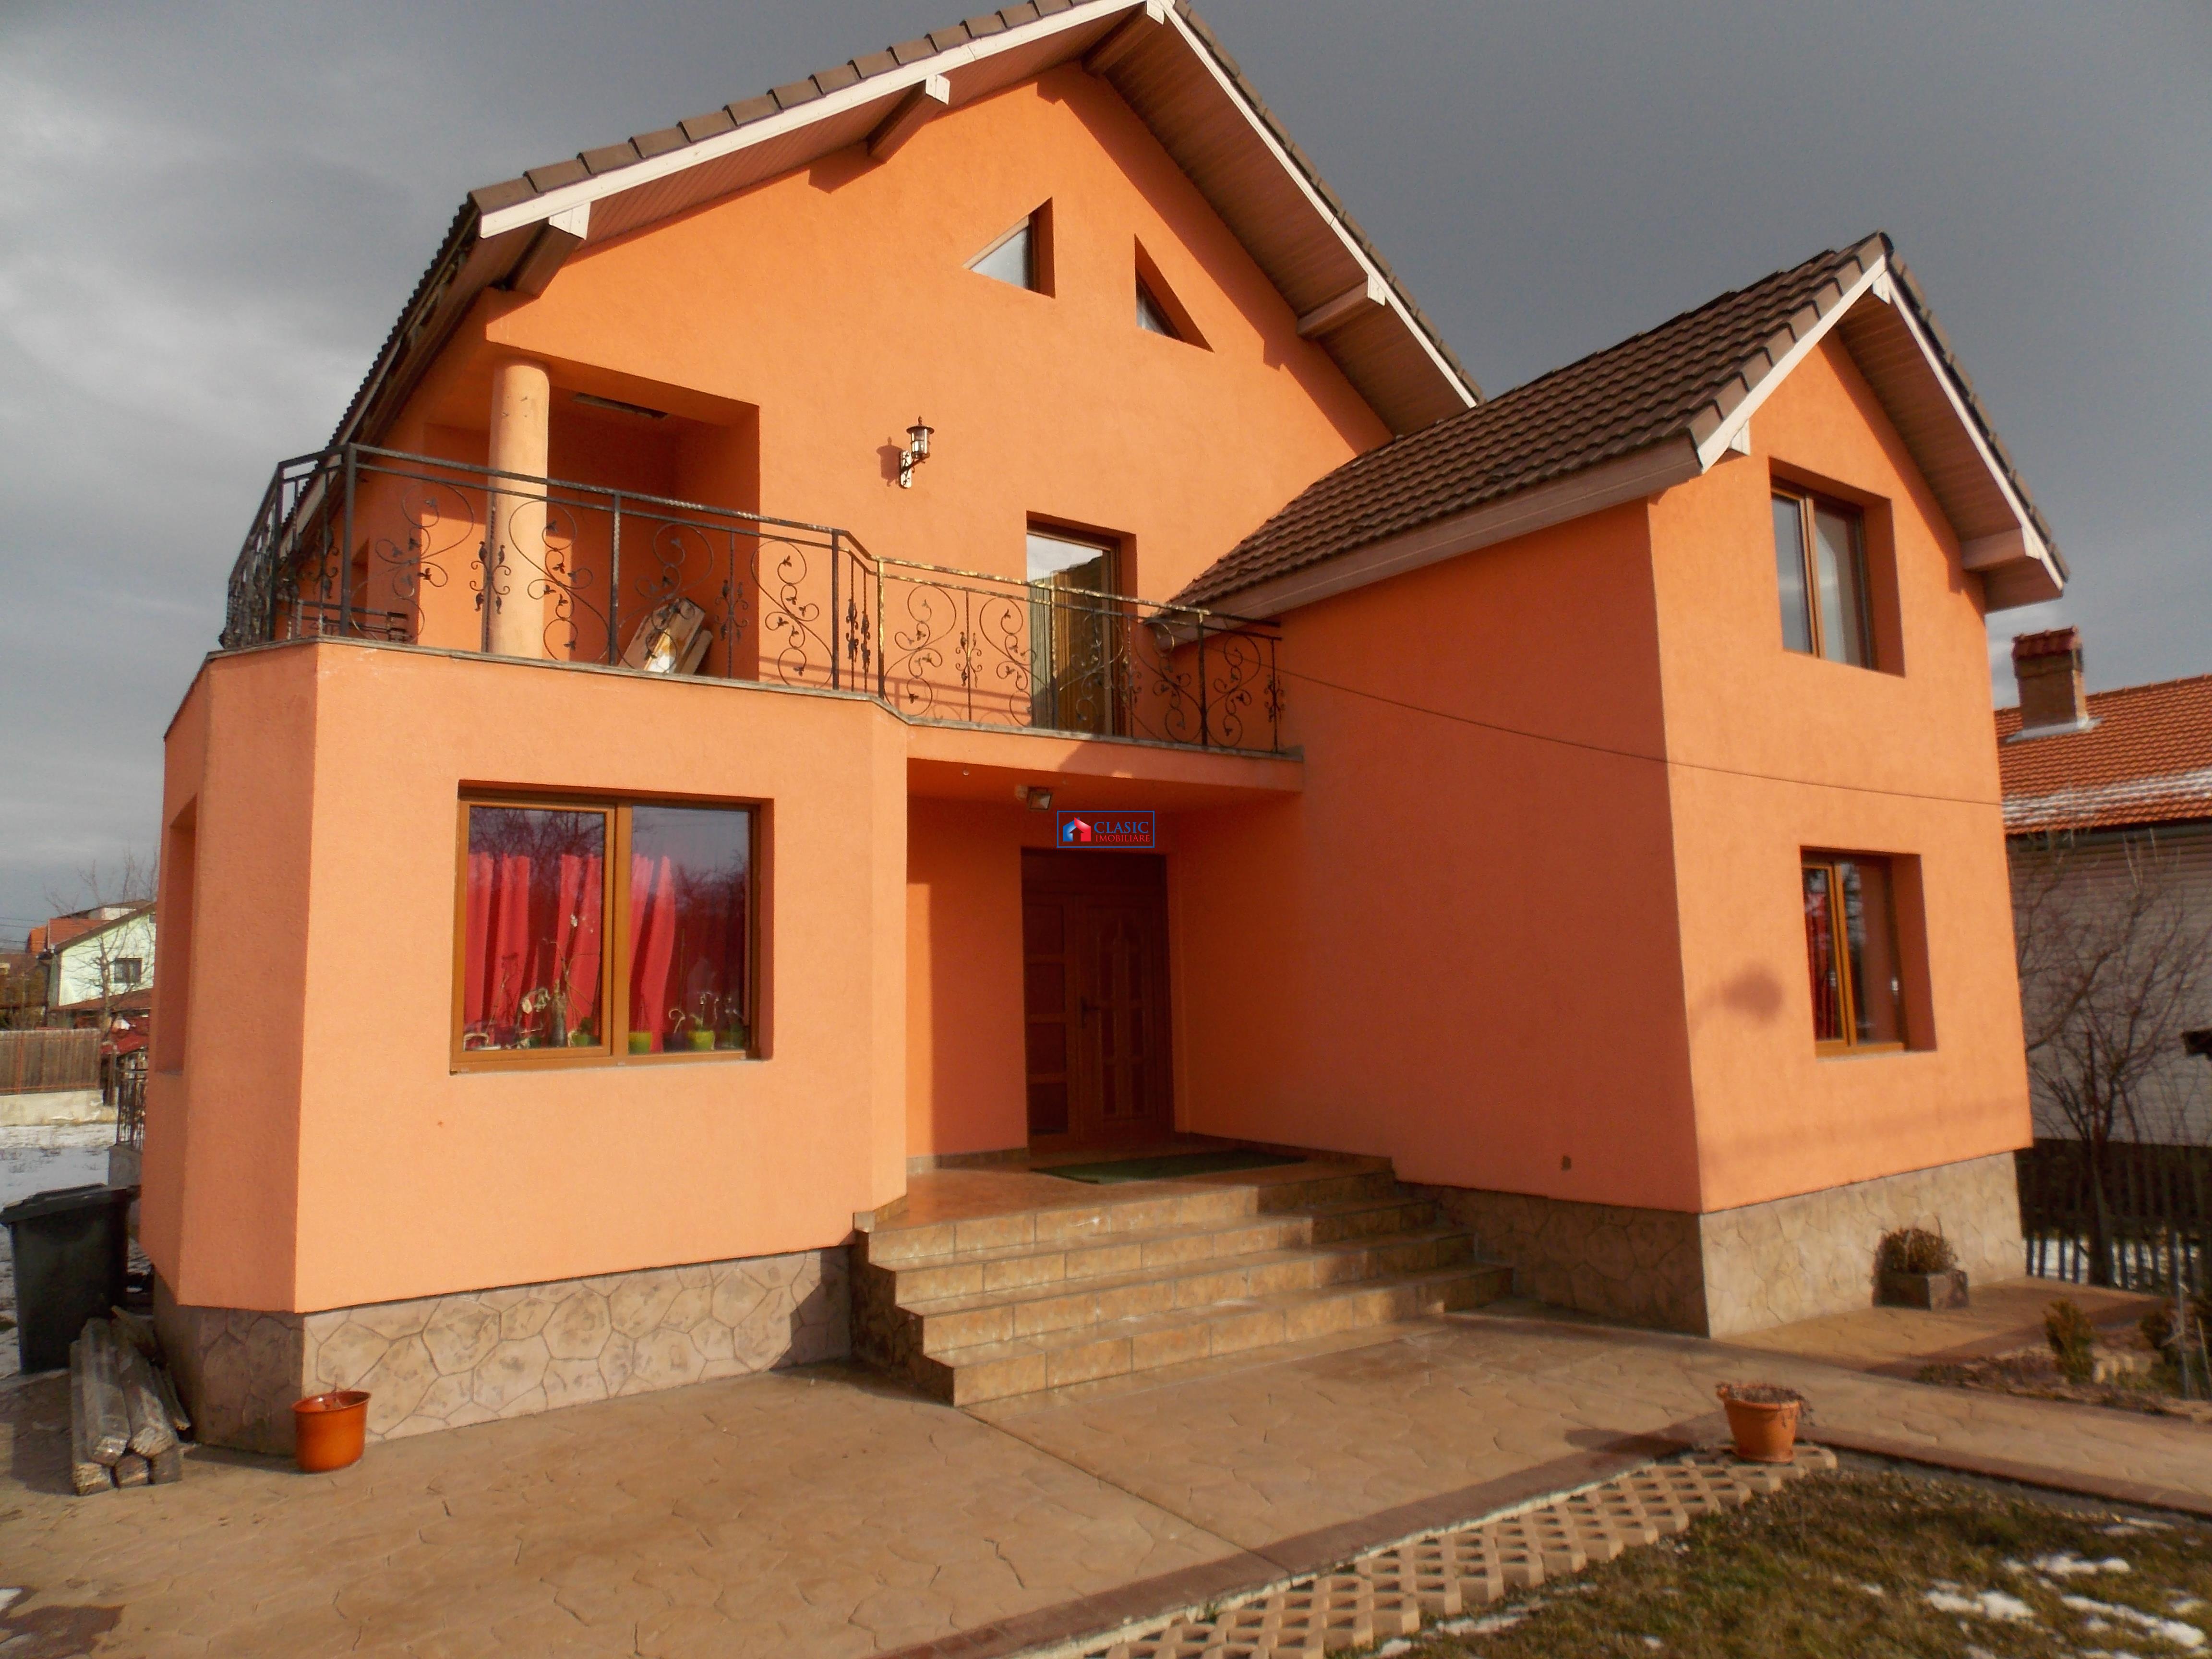 Inchiriere casa cu 1300 mp teren zona Buna Ziua, Cluj Napoca